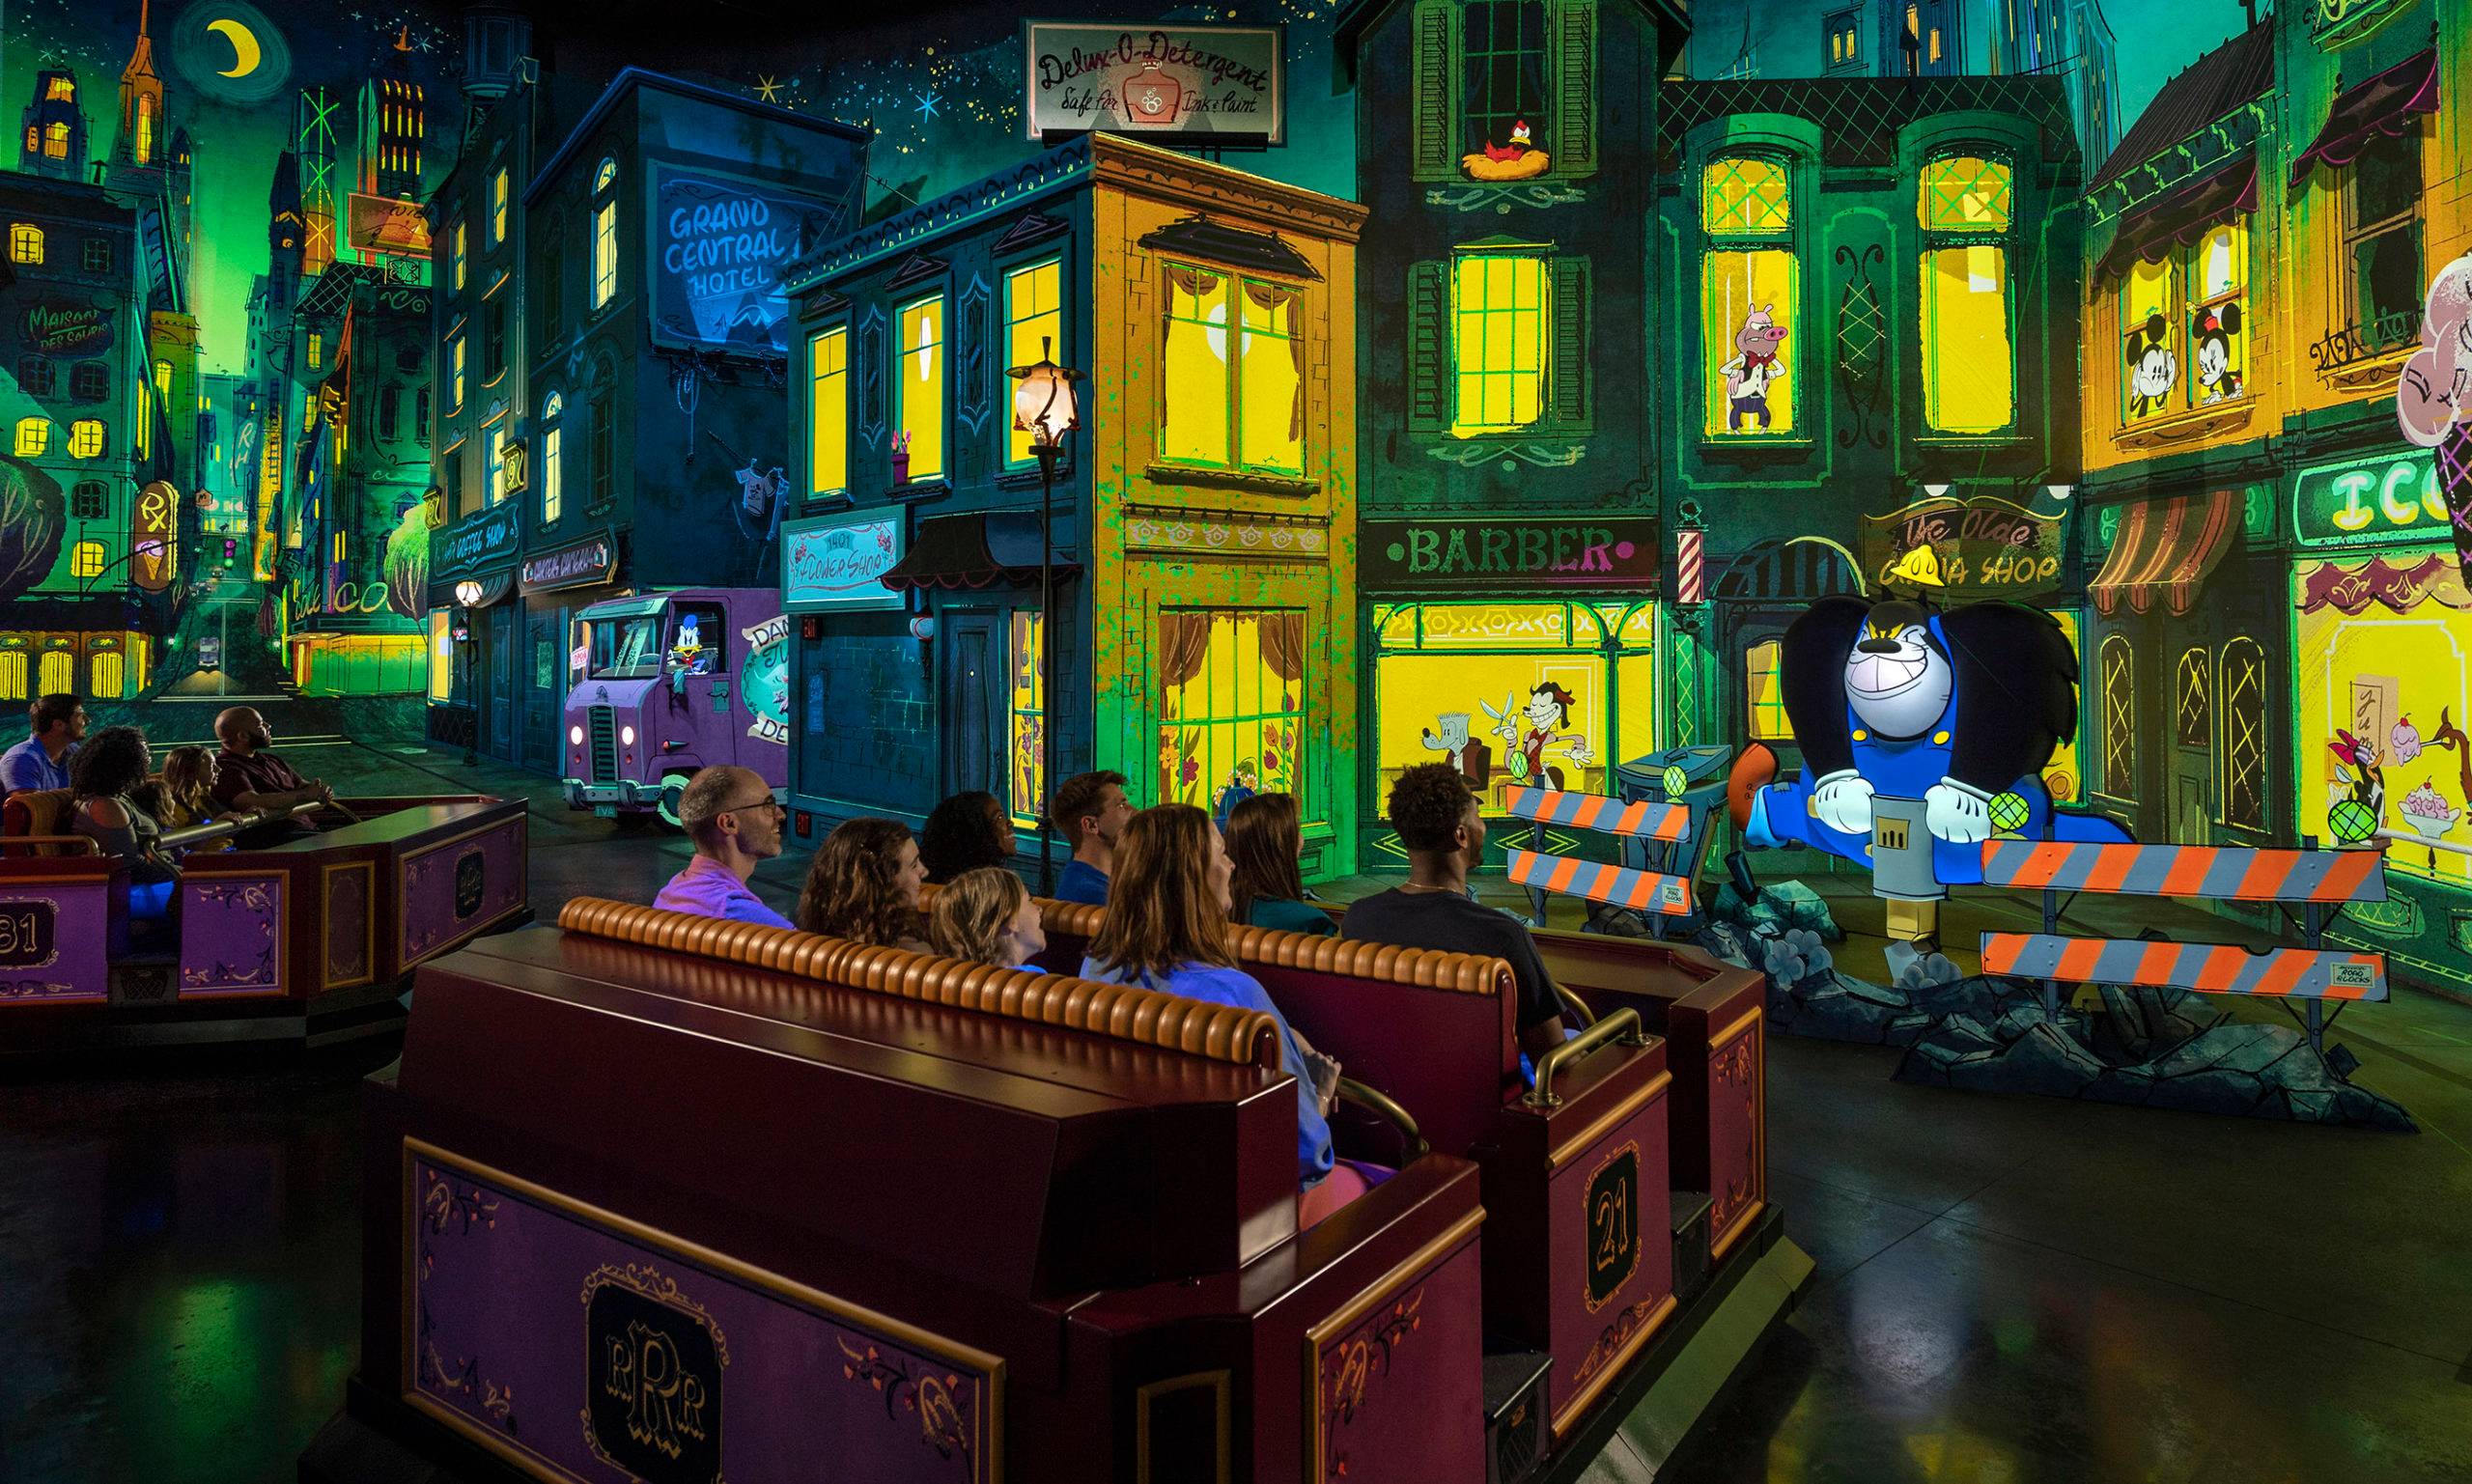 Mickey and Minnie's Runaway Railway pre-show returns at Disney's Hollywood Studios